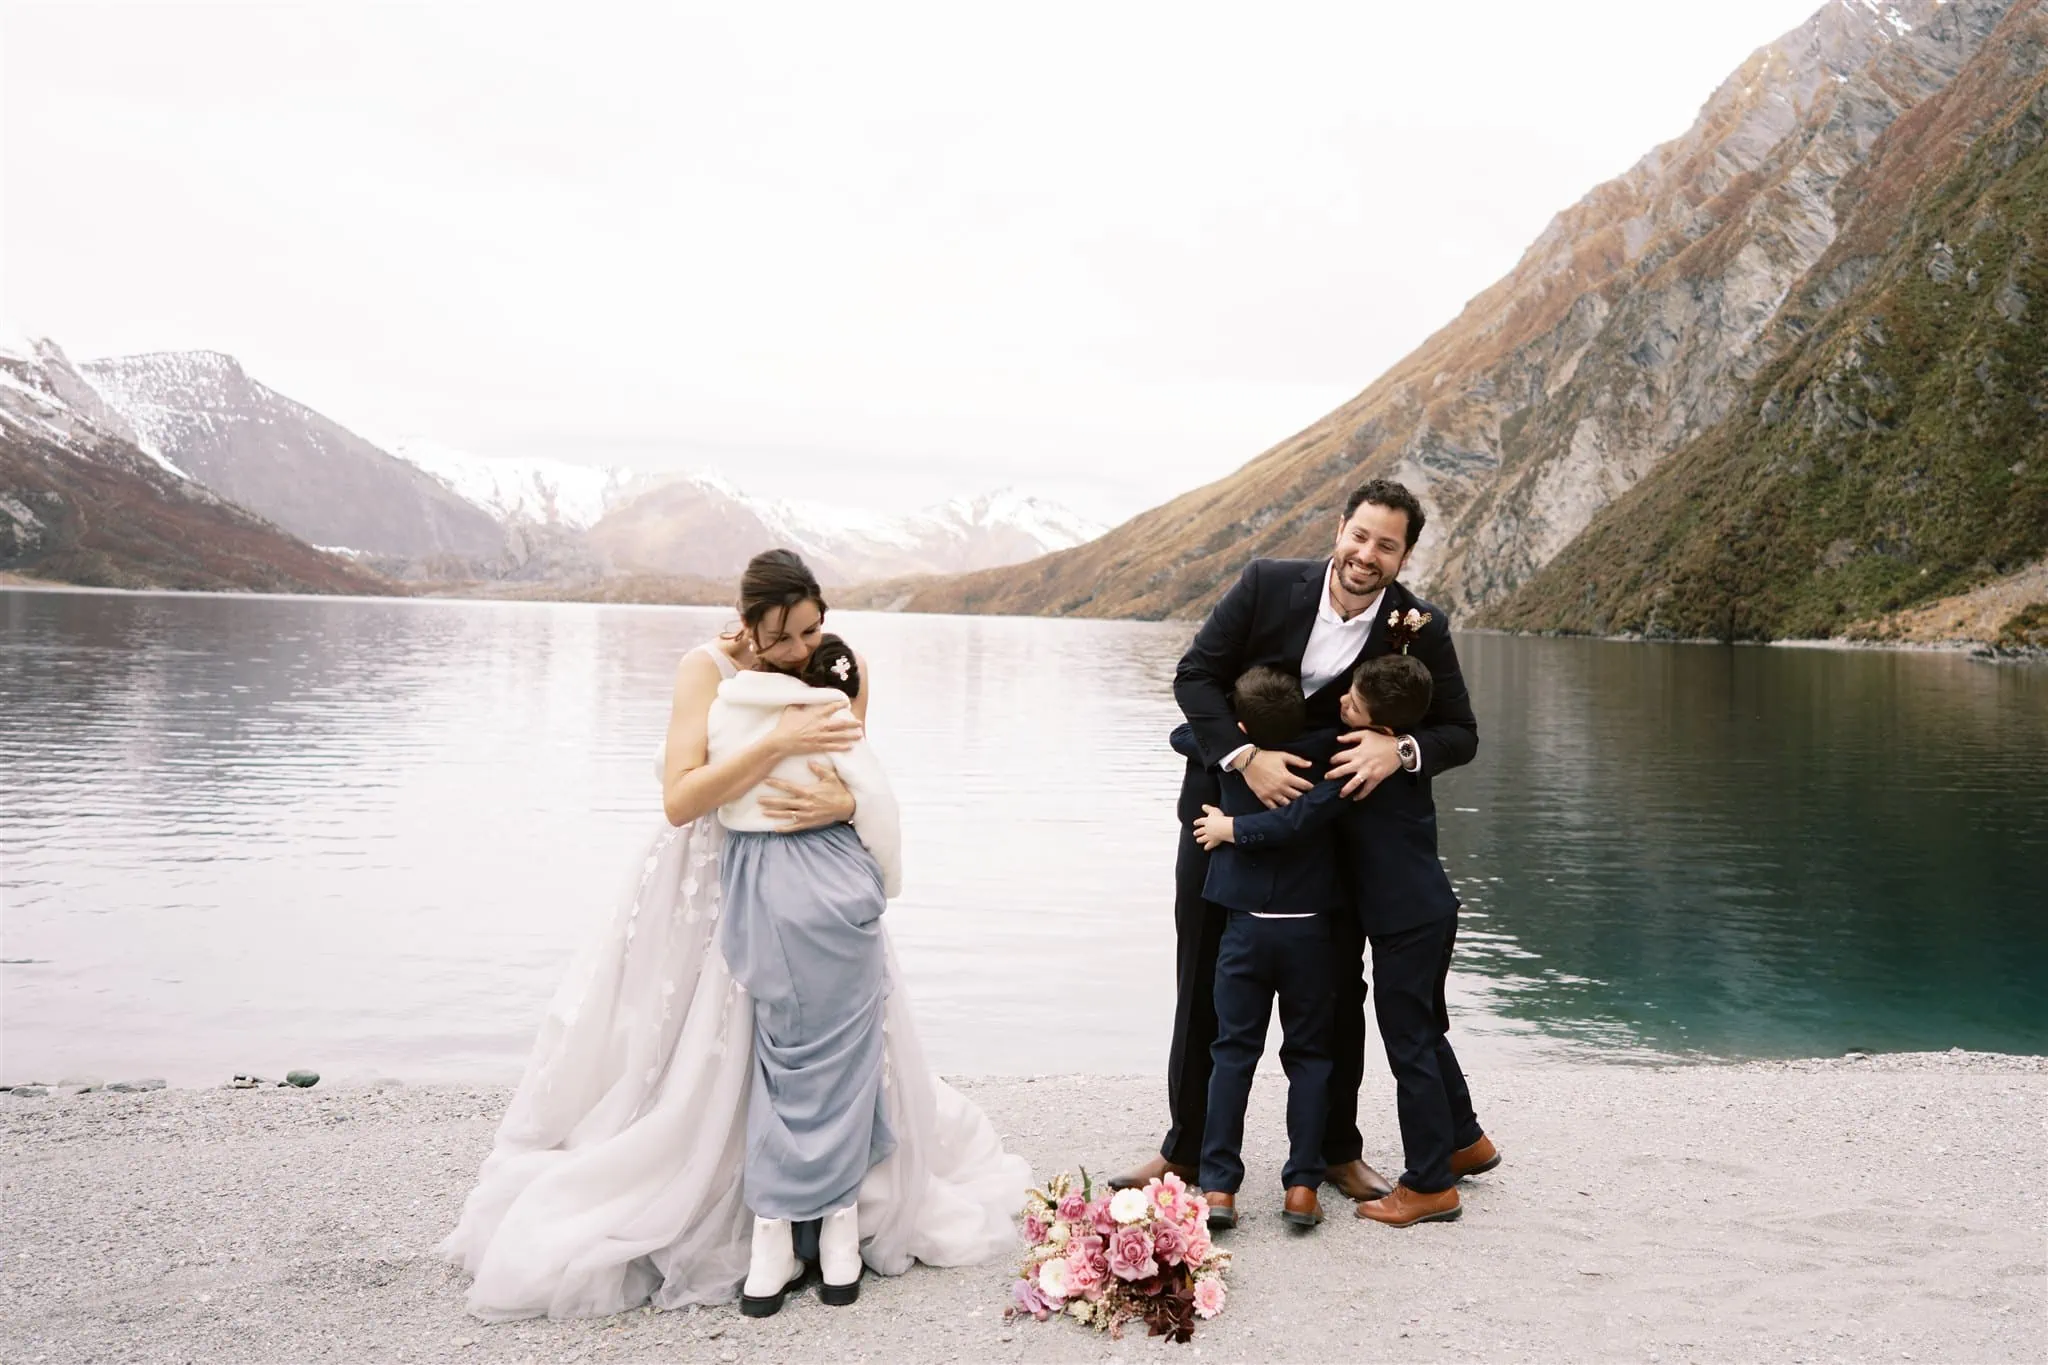 Queenstown New Zealand Elopement Wedding Photographer - A bride and groom hugging on the shore of Lake Wakatipu in Queenstown, New Zealand.